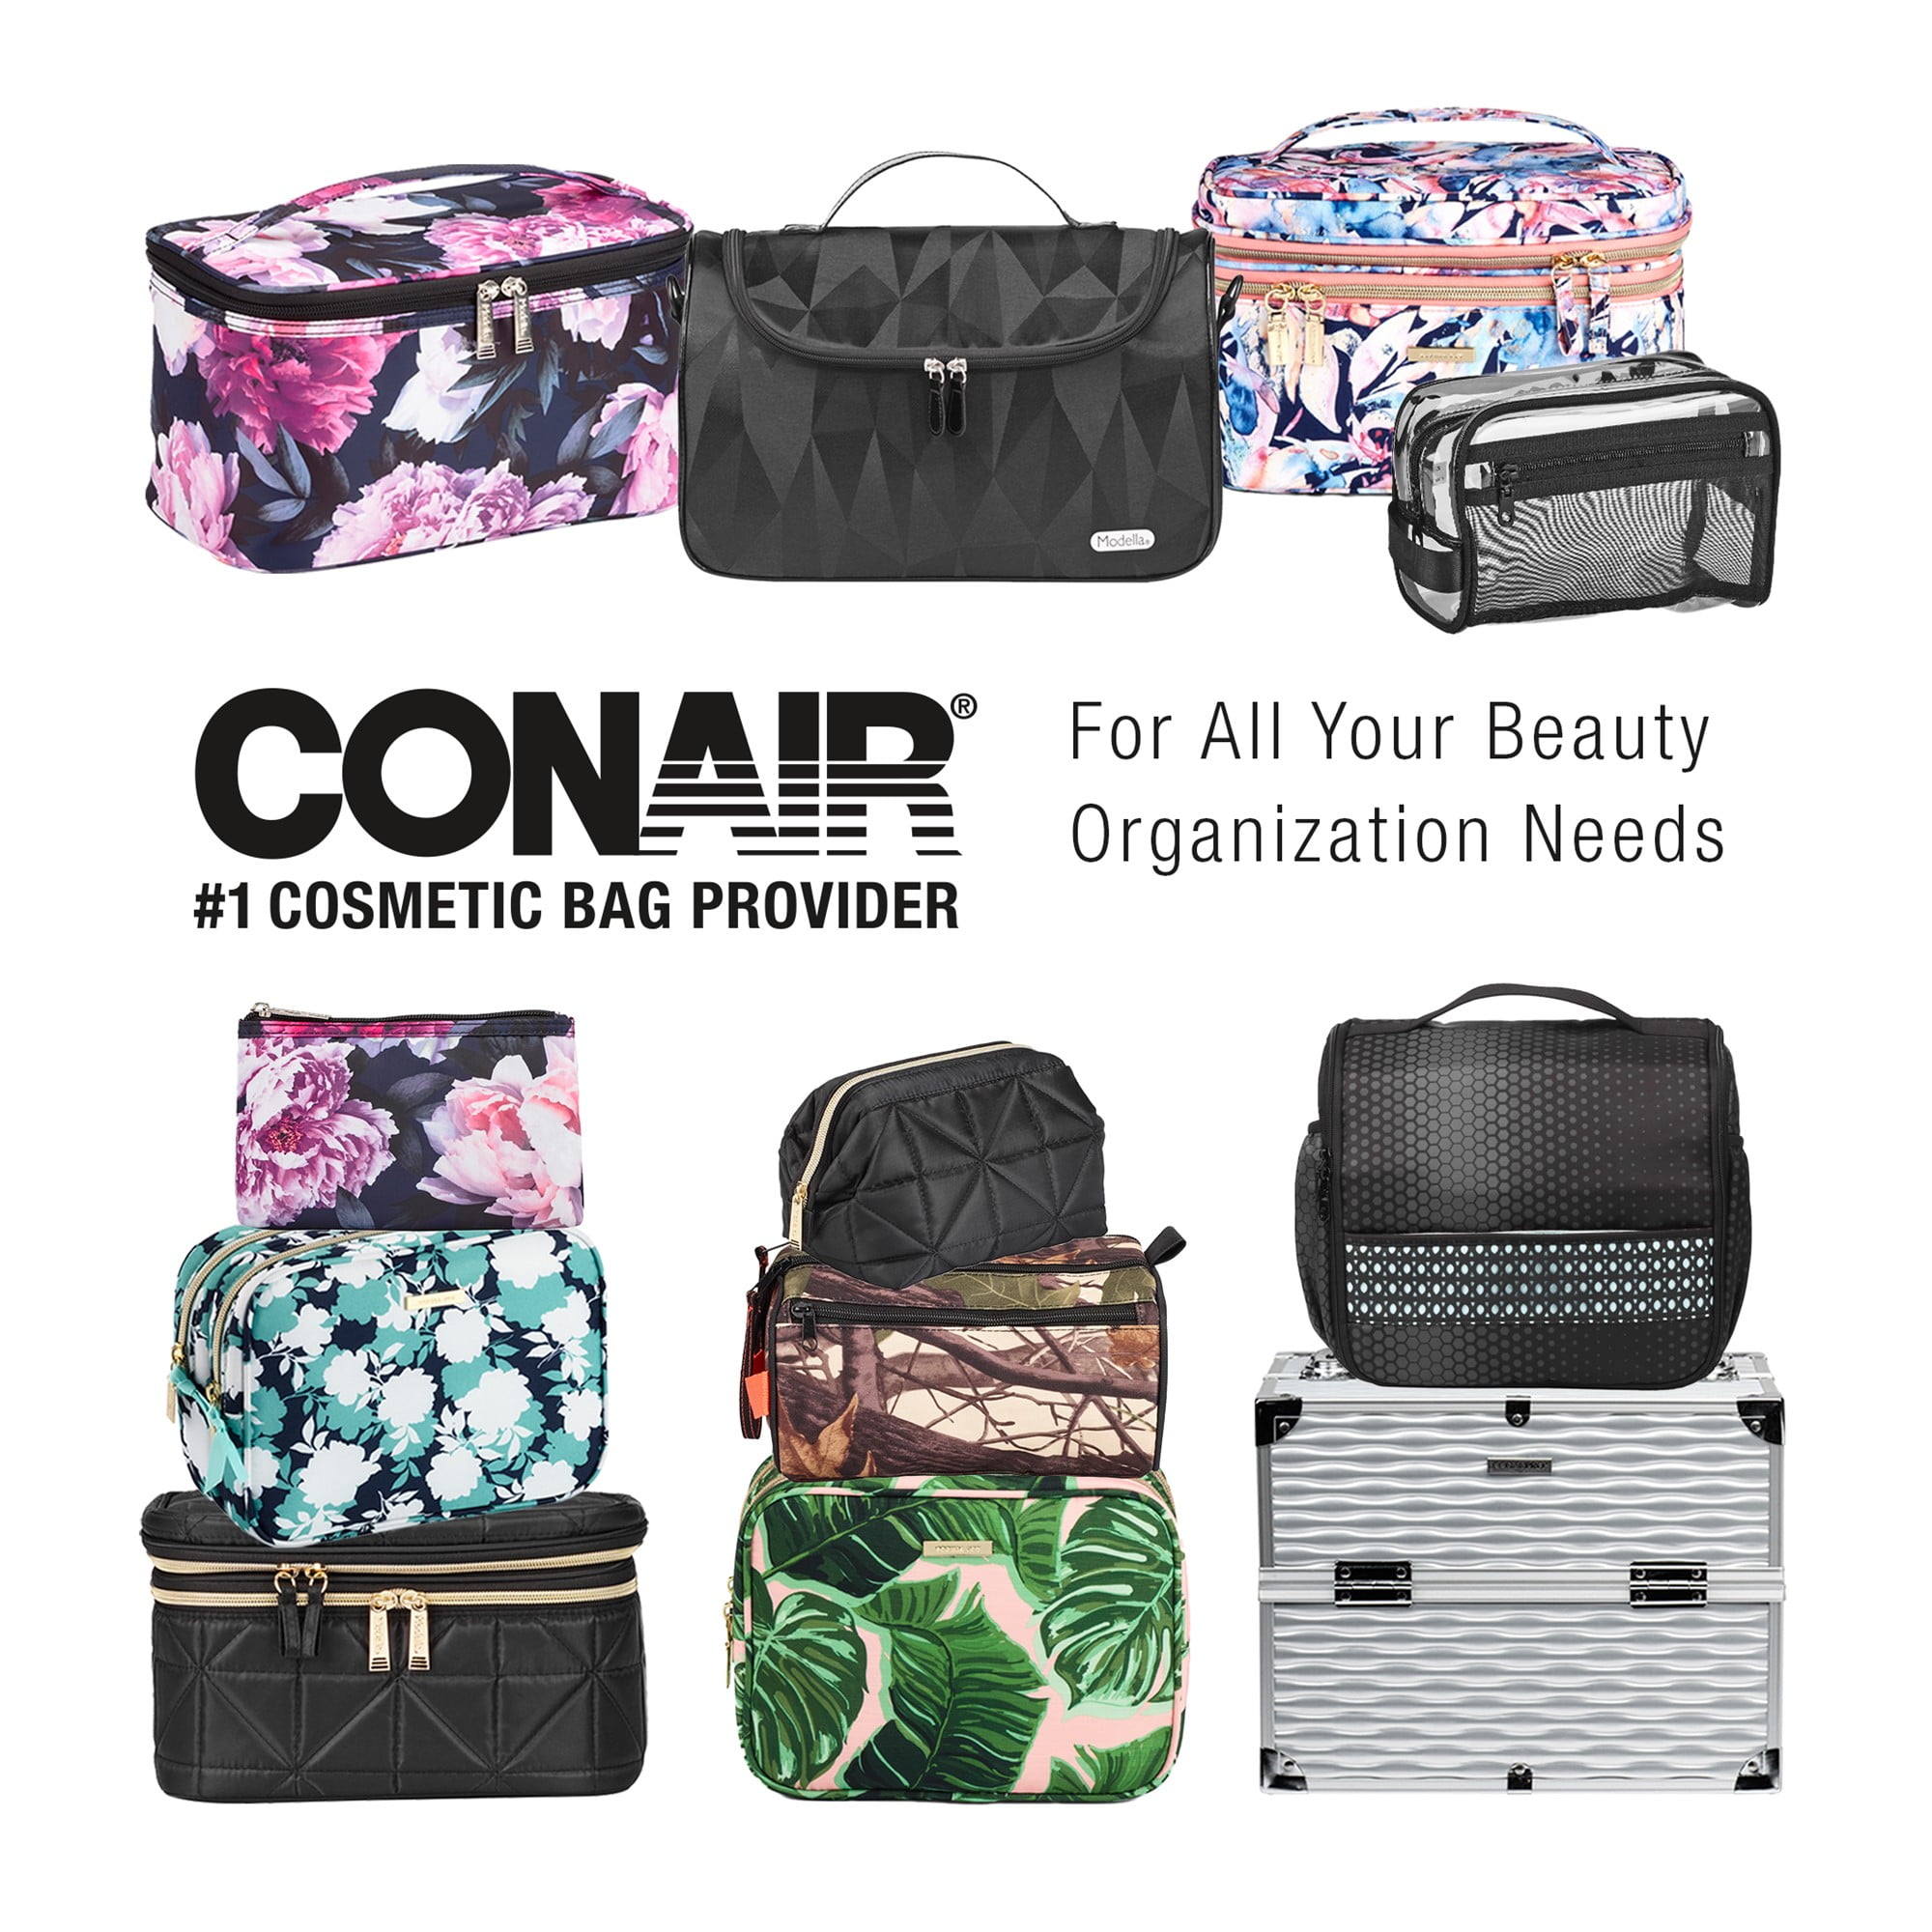 Travel Makeup Bag For Women – UNIQQ